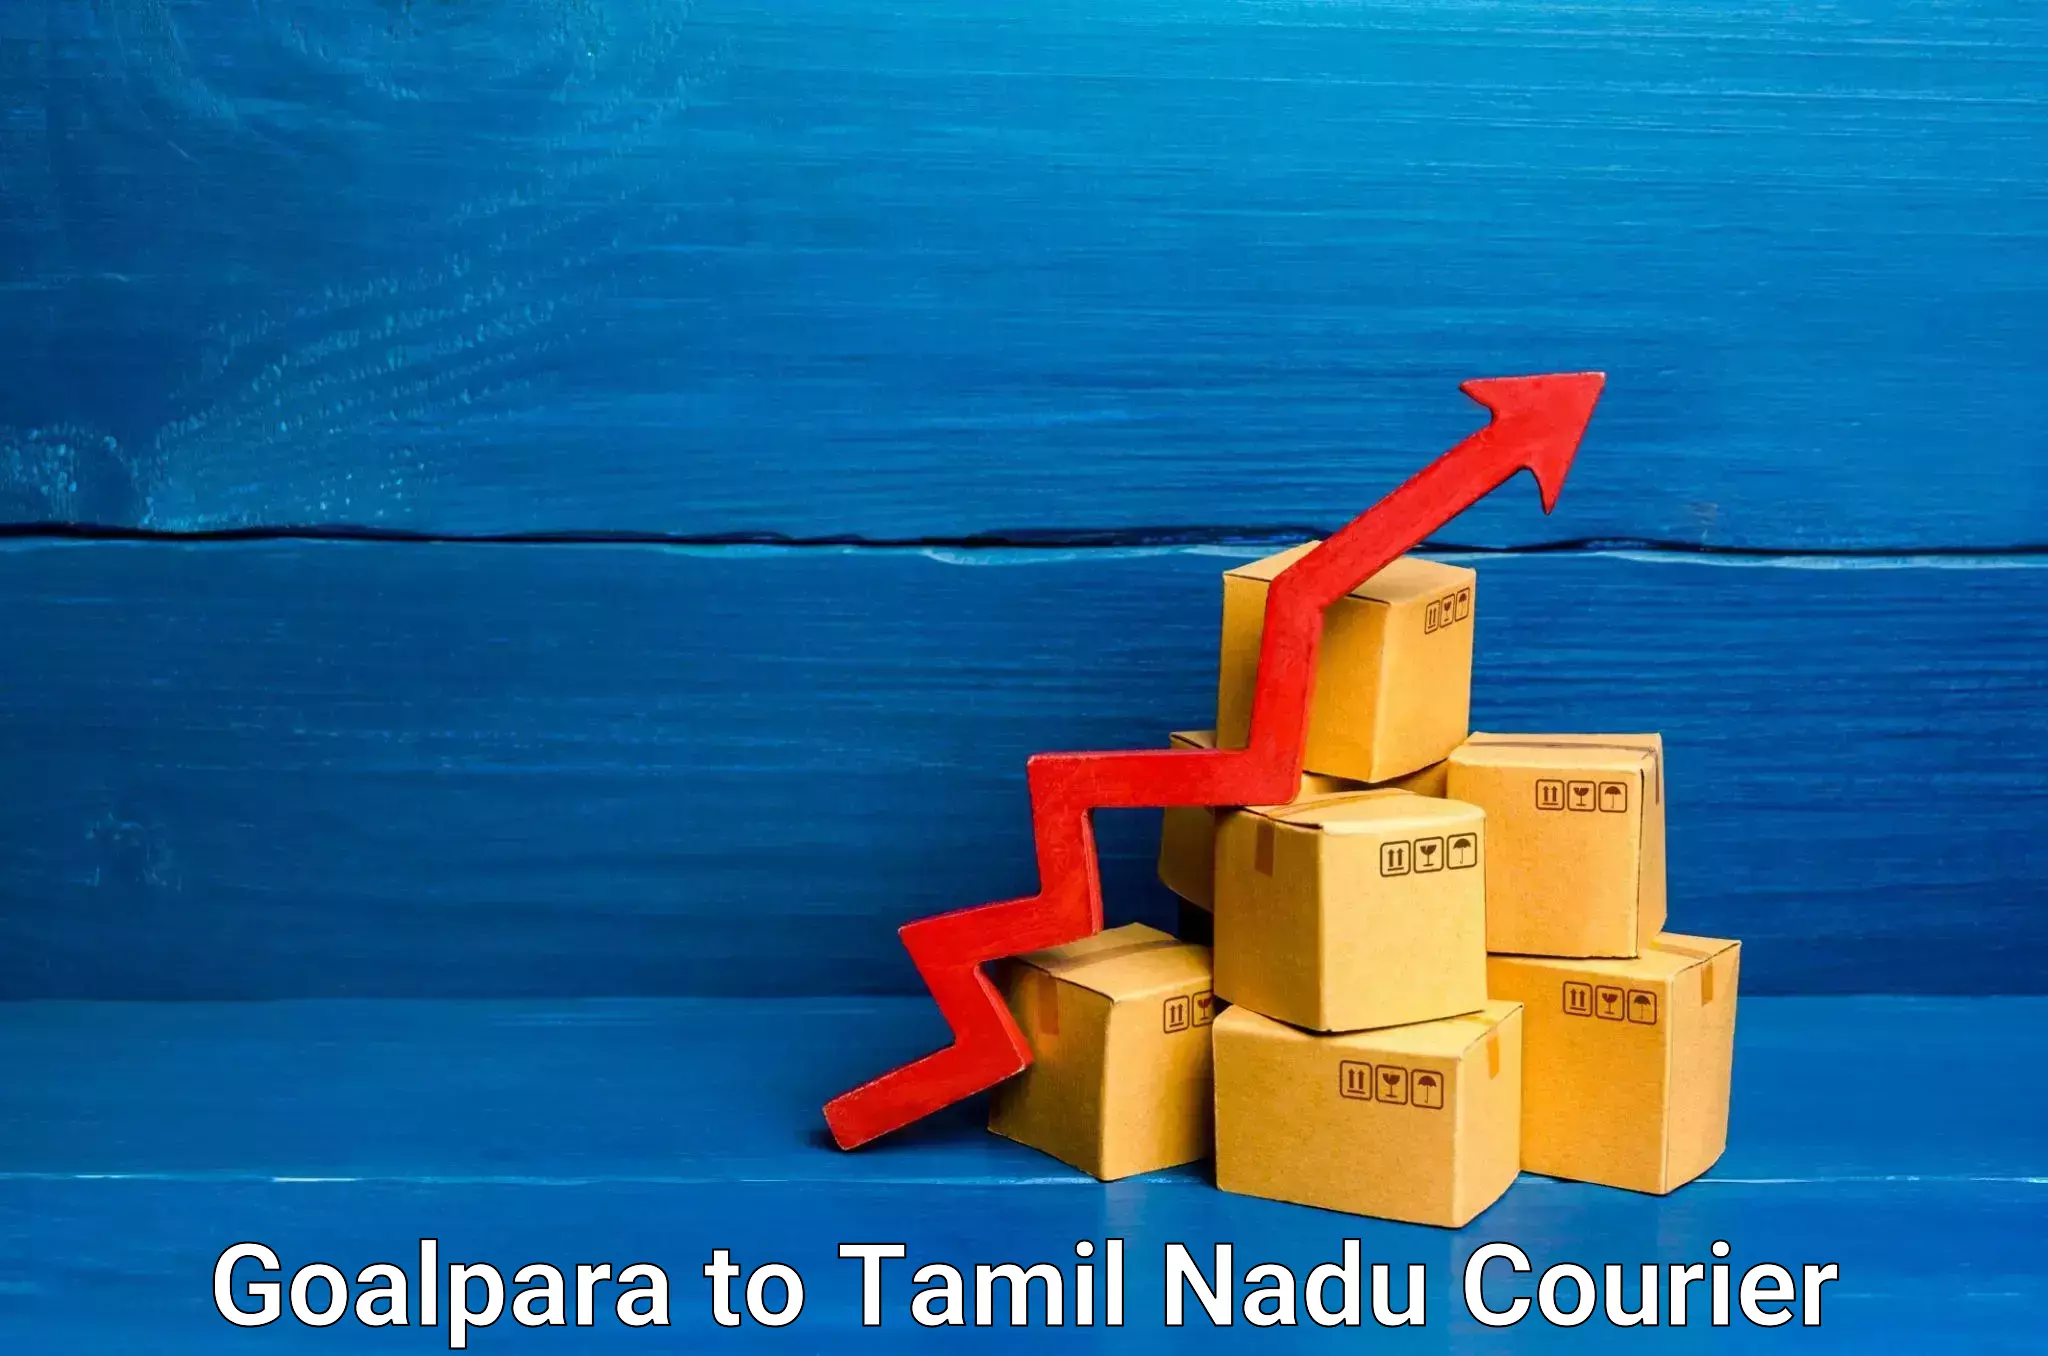 Cash on delivery service Goalpara to Kagithapuram